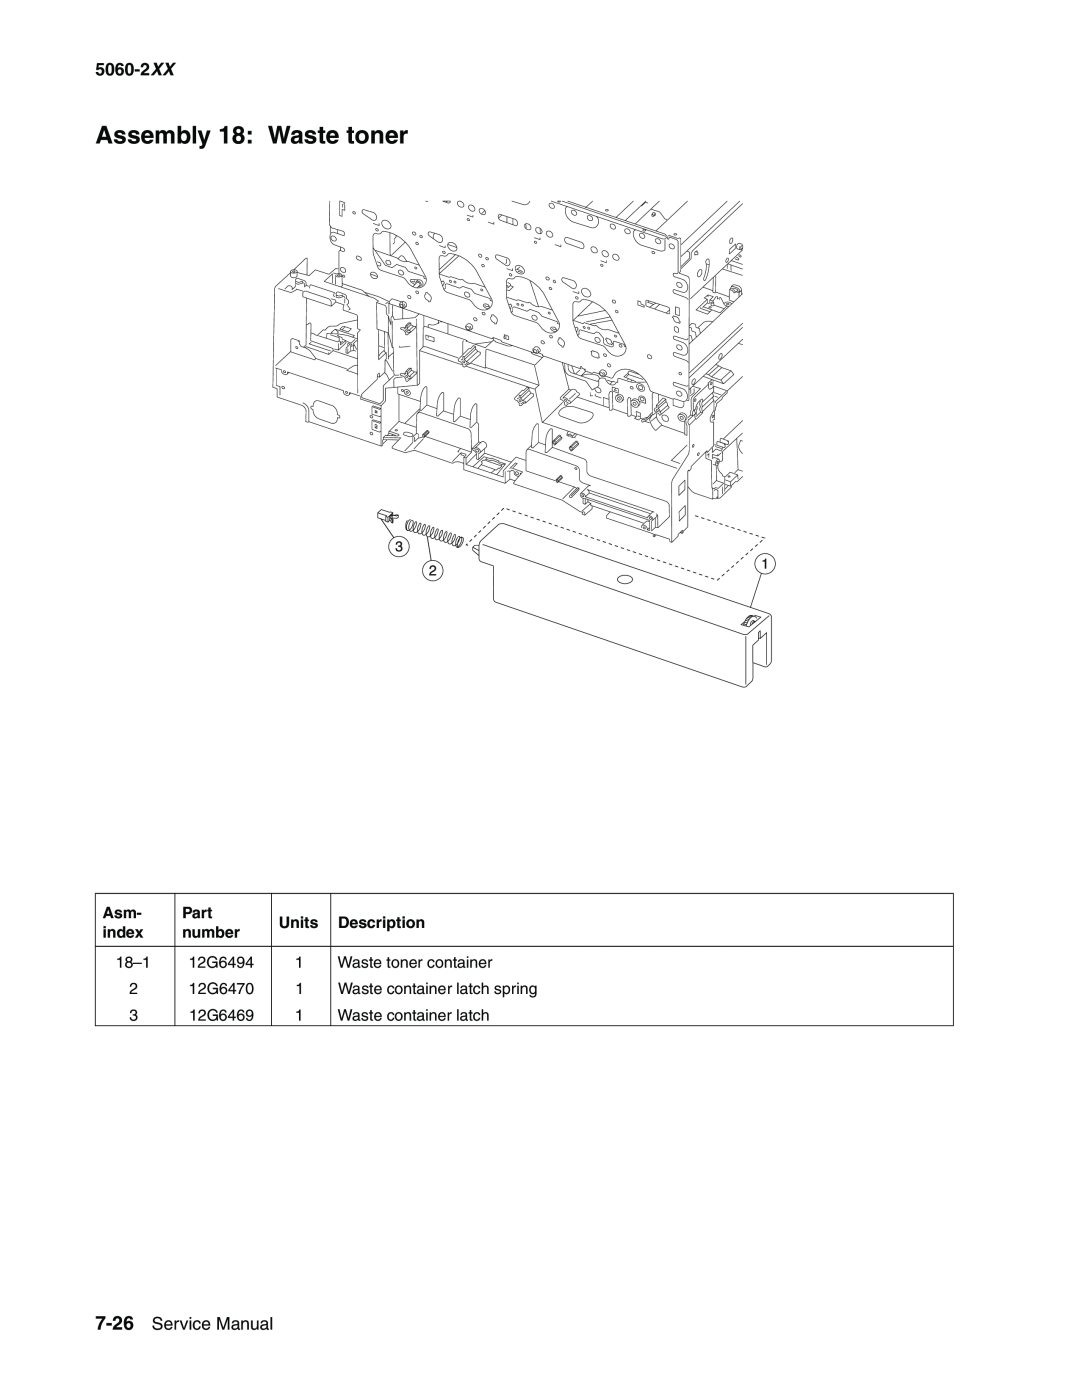 Lexmark 5060-2XX manual Assembly 18 Waste toner, Service Manual, Part, Units, Description, index, number 